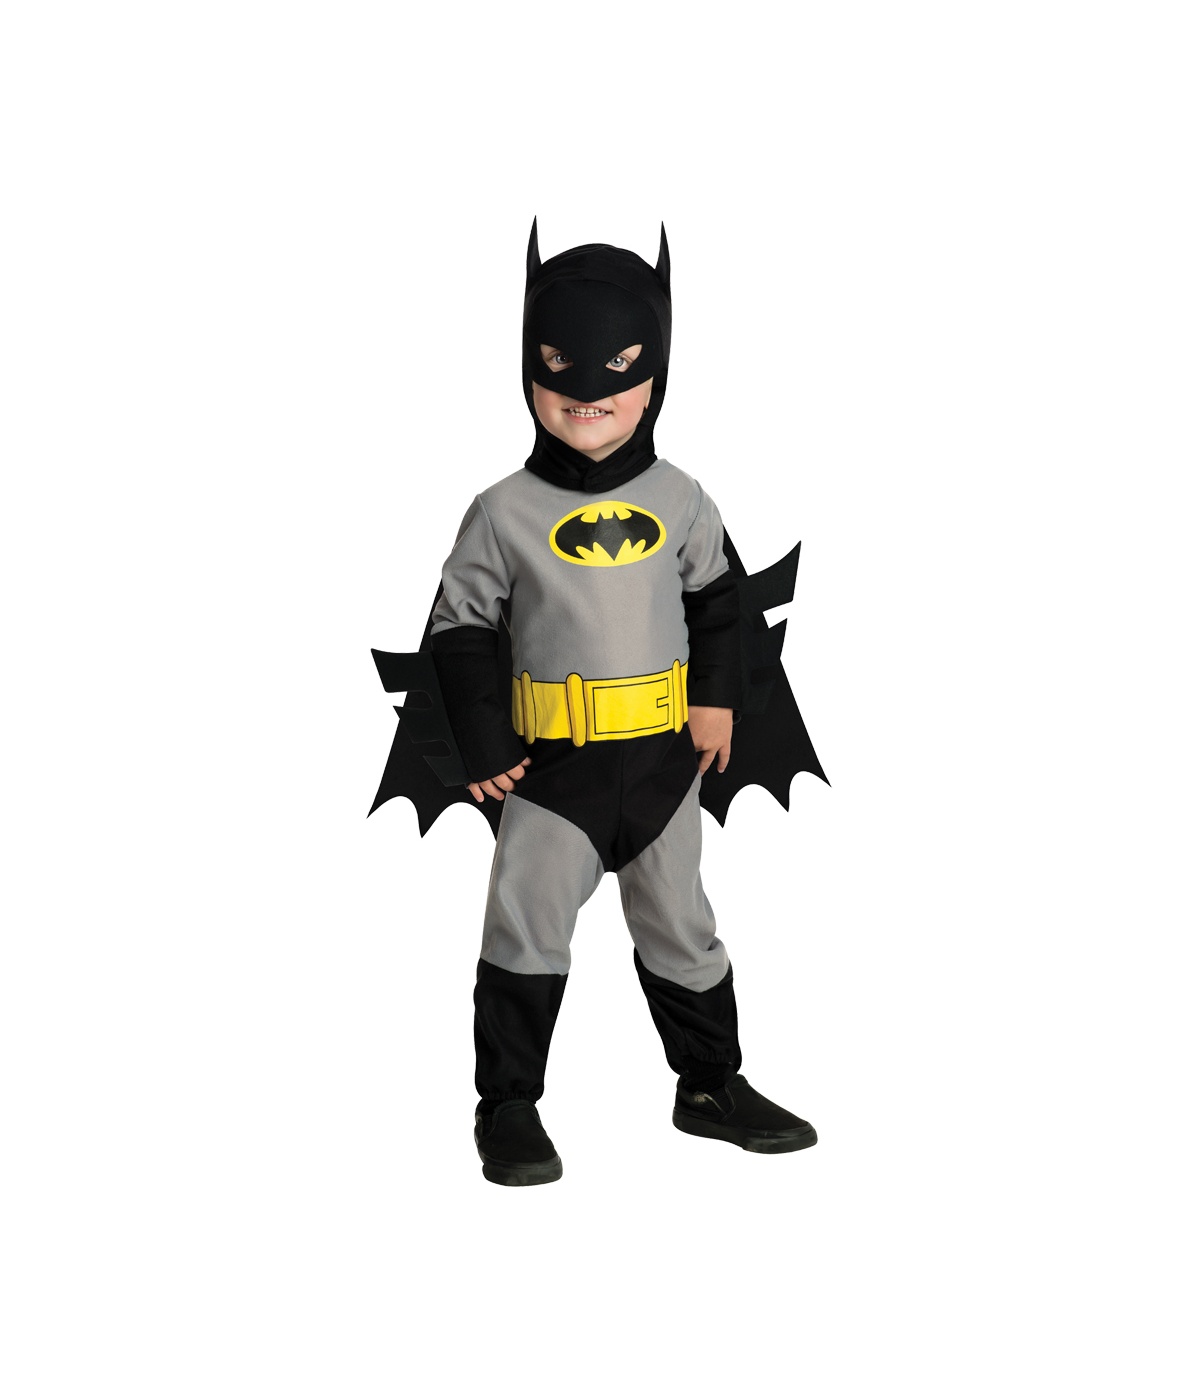 Batman Super Toddler Costume